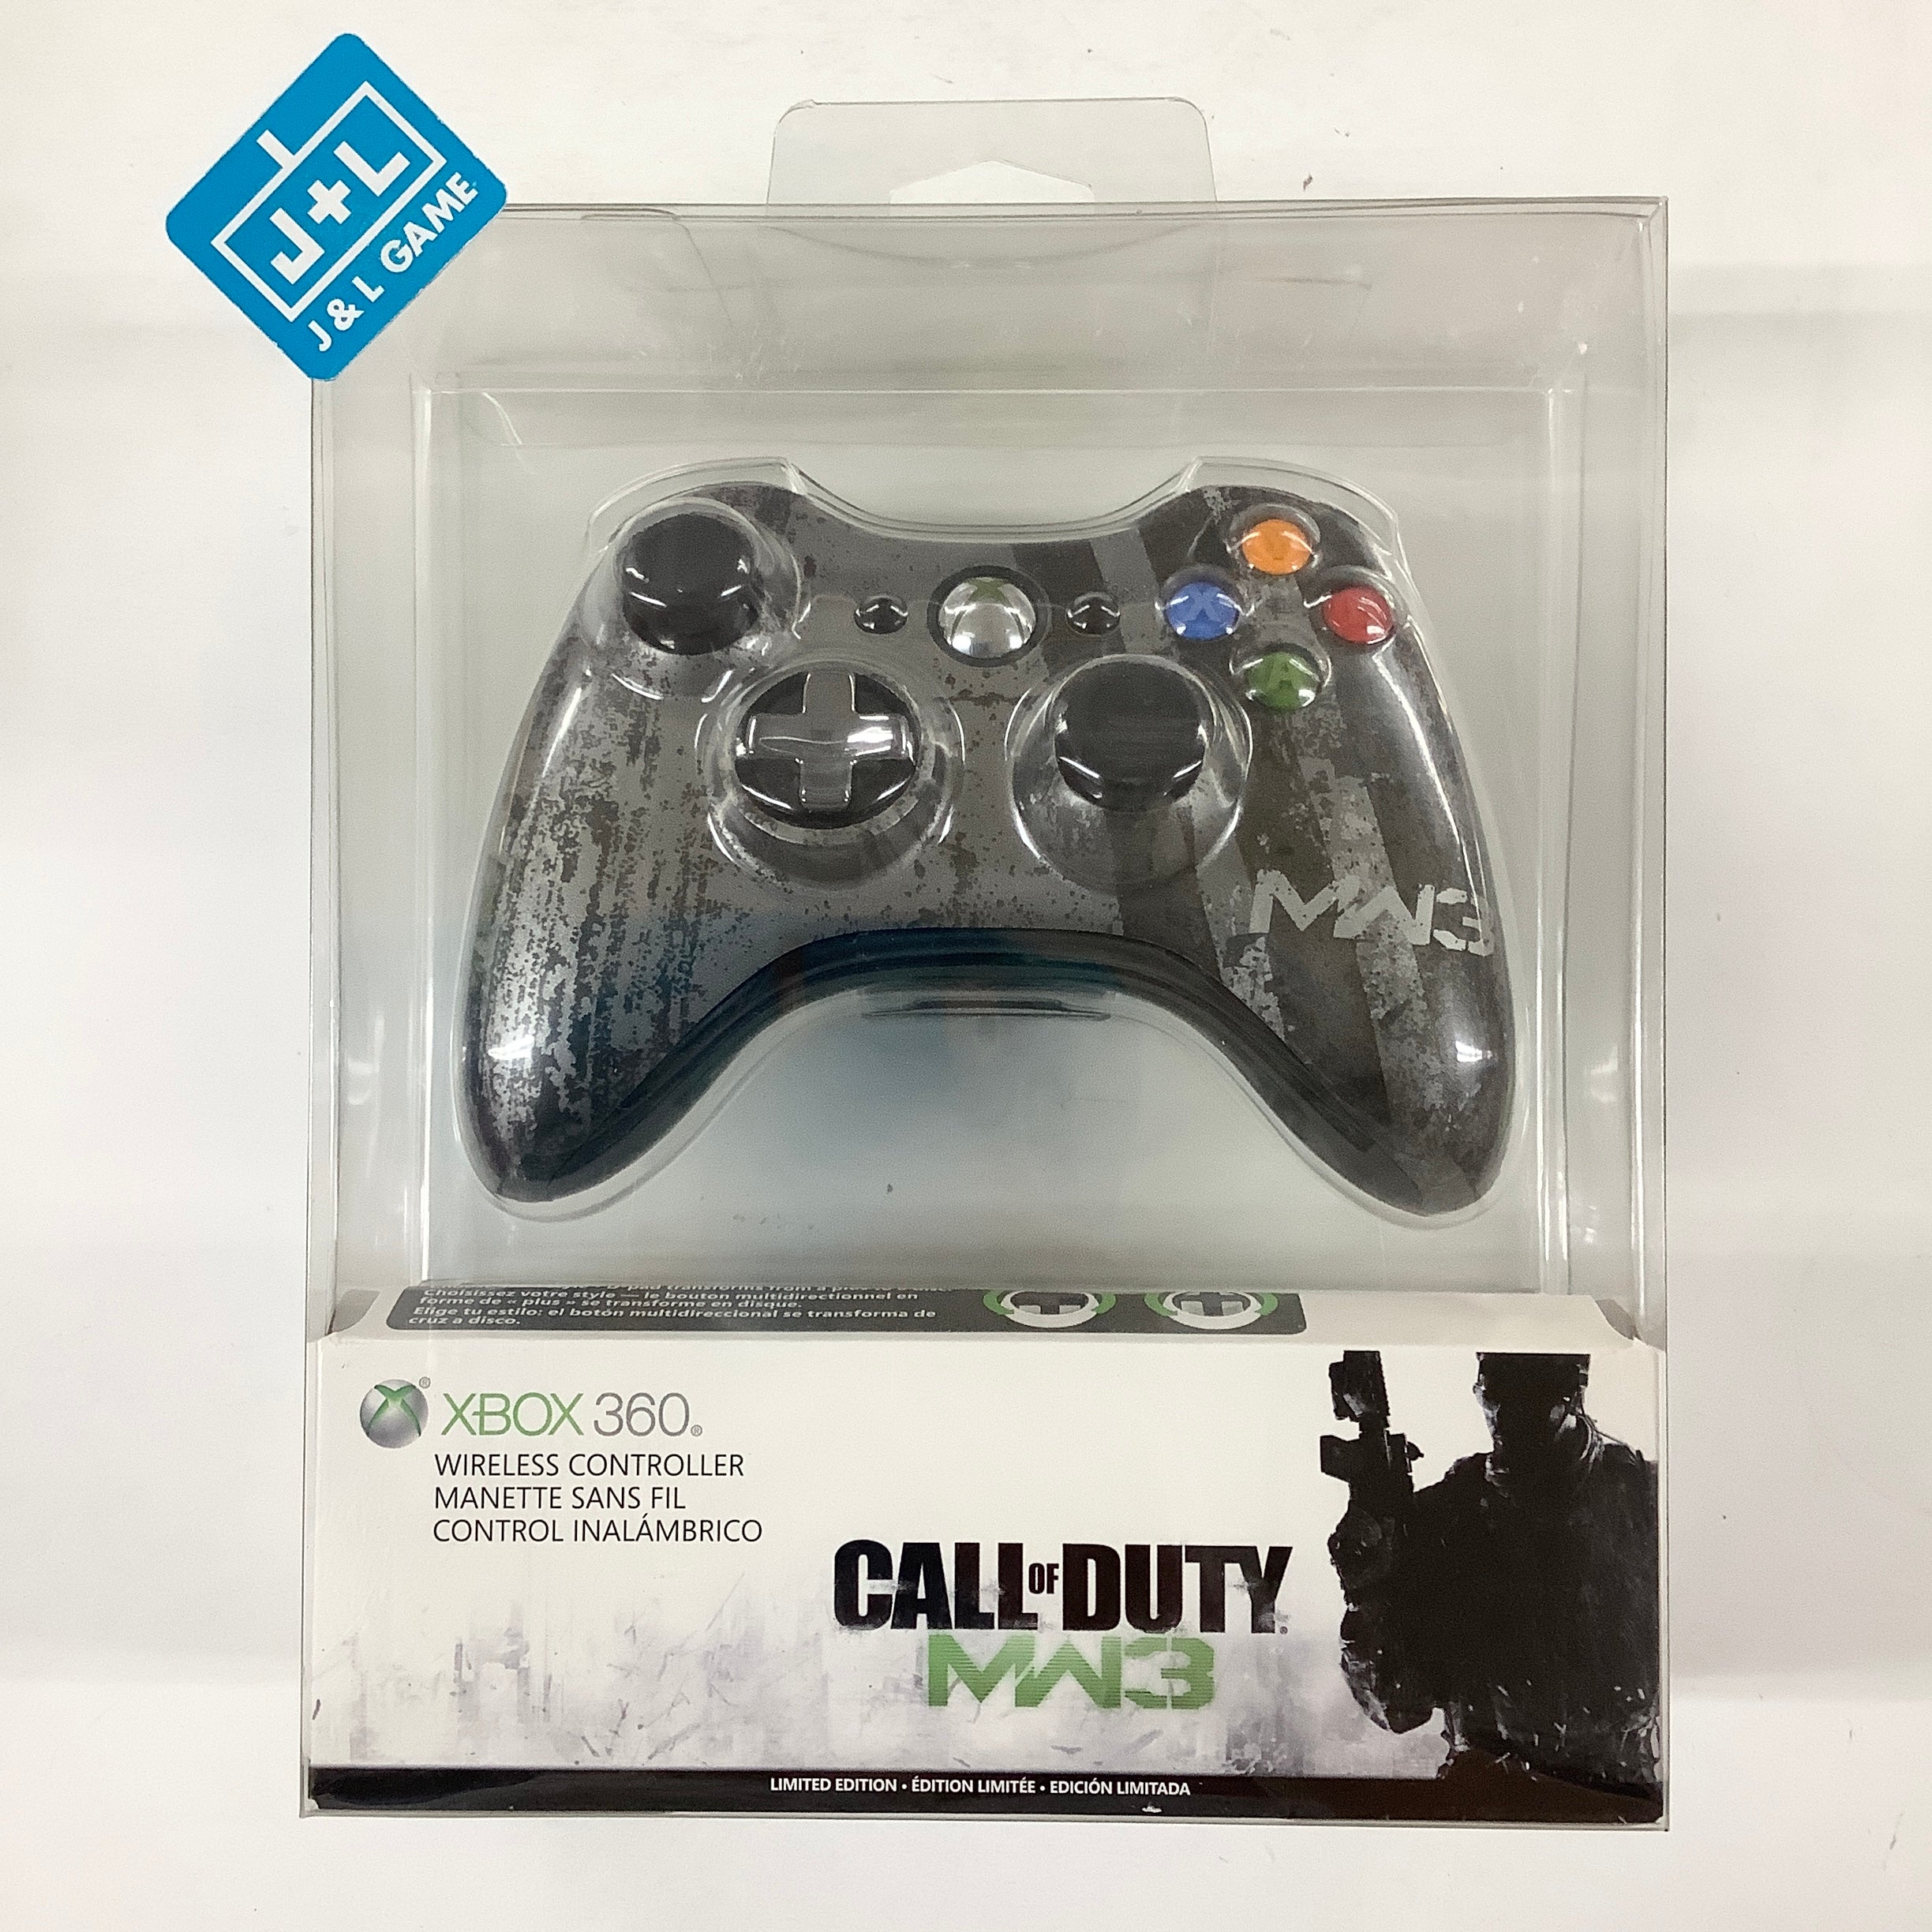 Microsoft Call of Duty: Modern Warfare 3 Limited Edition Wireless Controller - Xbox 360 Accessories Microsoft   